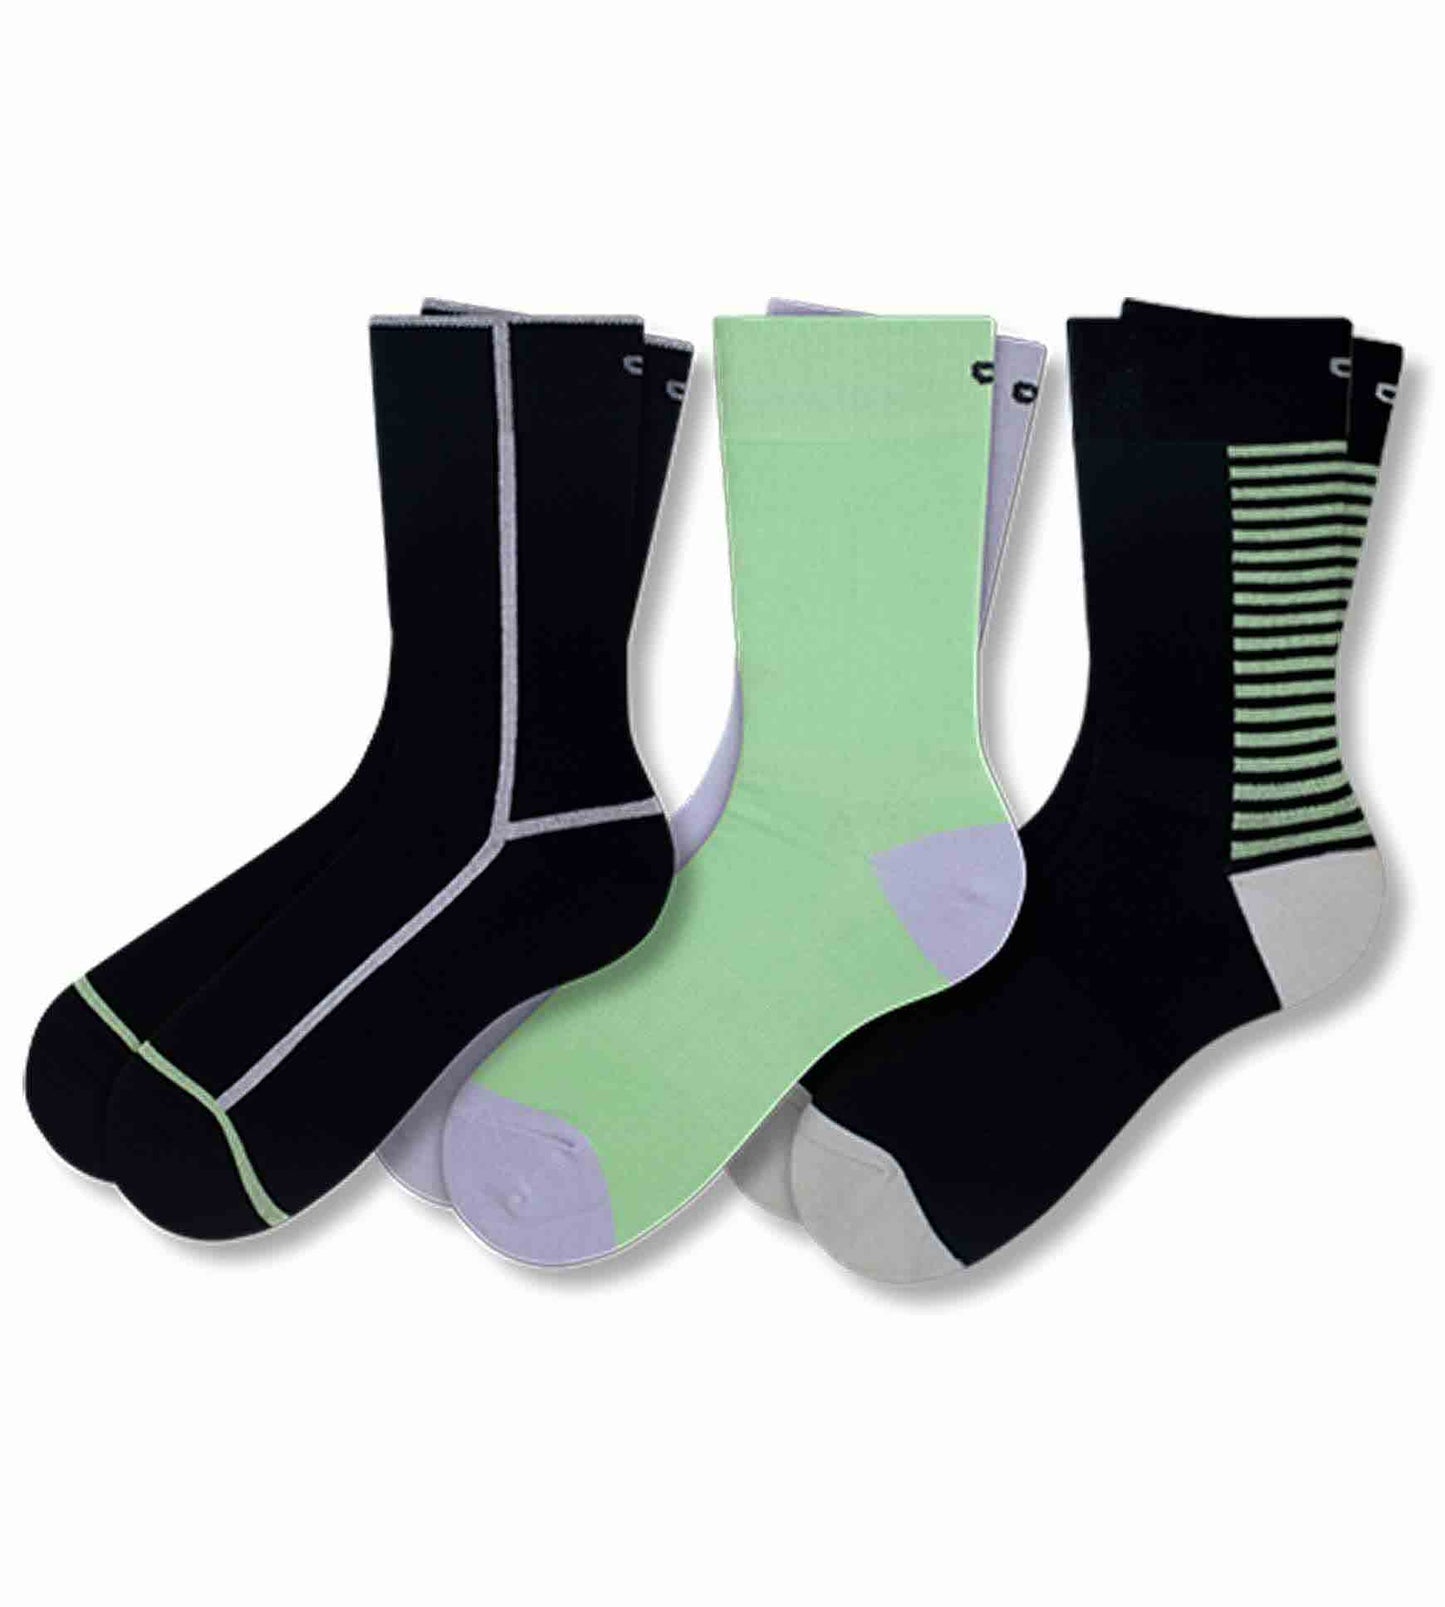 Line 'Em Up Crew Socks 3 Pack colors contain: Dark sea green, Snow, Black, Lights late gray, Dark sea green, Dark slate gray, Gains boro, Dim gray, Dark Gray, Silver